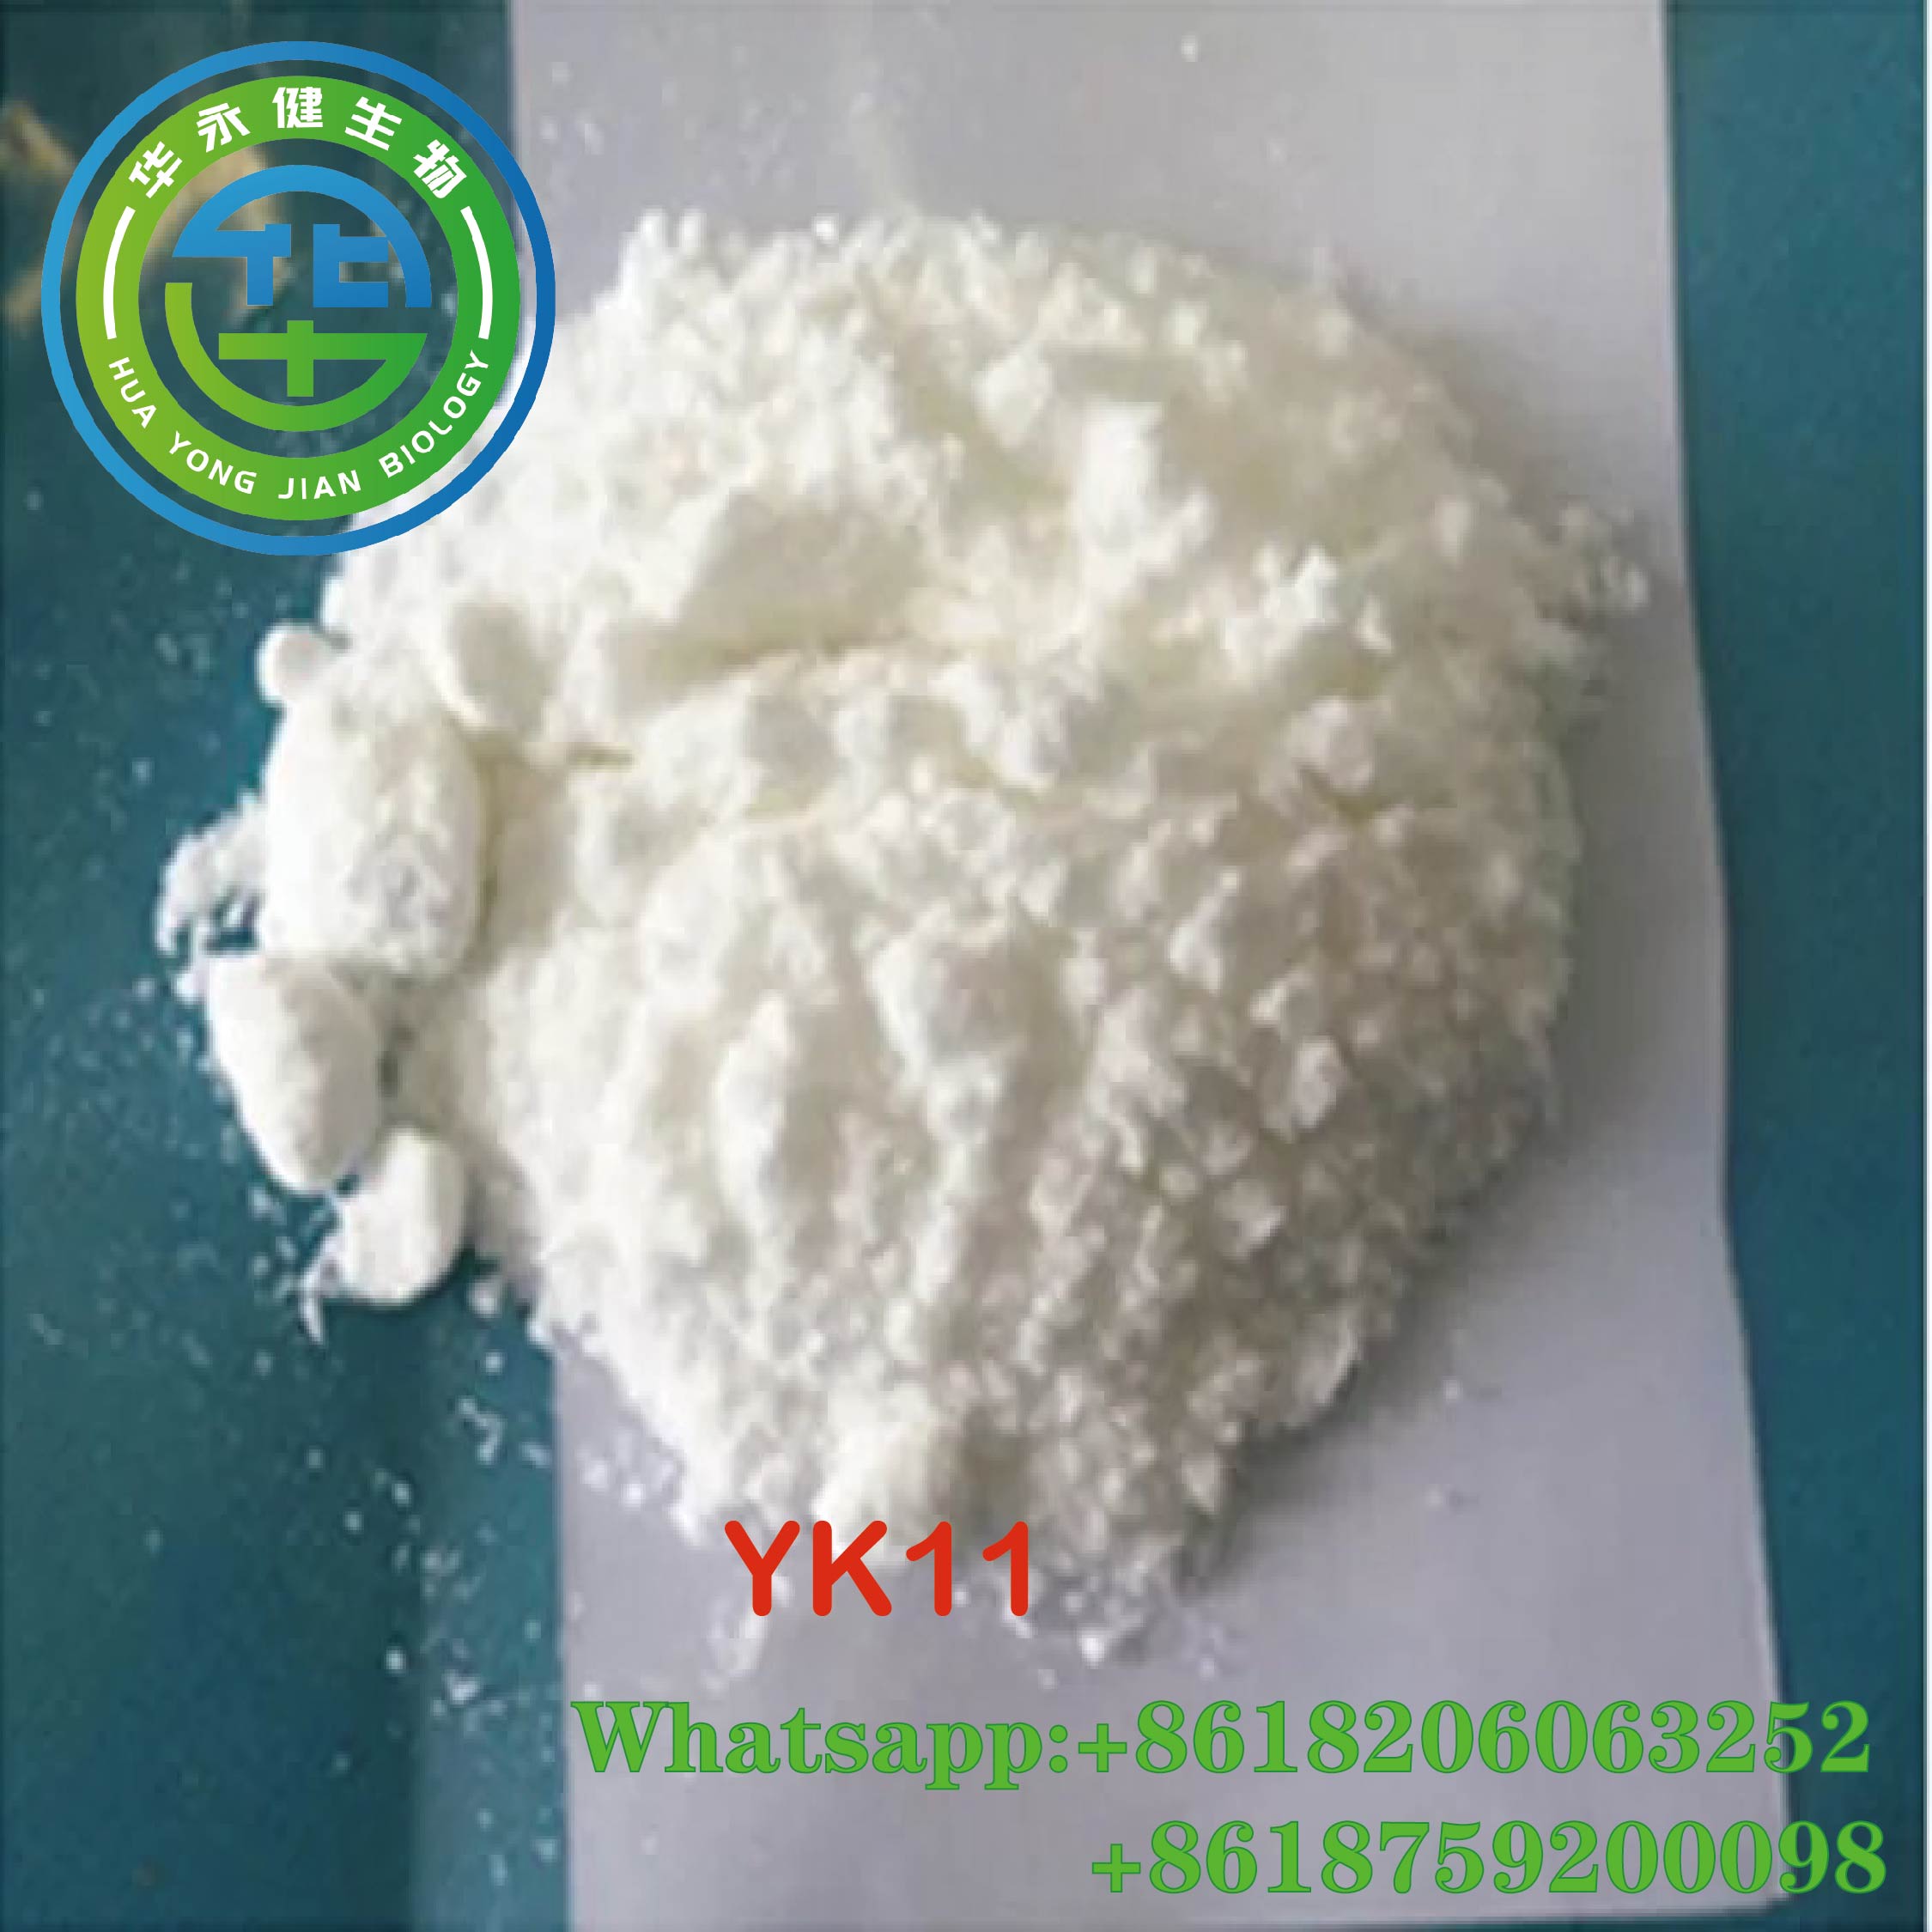  Yk11 Sarm Myostatin Inhibitor Yk-11Raw Steroid Powder for Muscle Gaining CAS 431579-34-9 